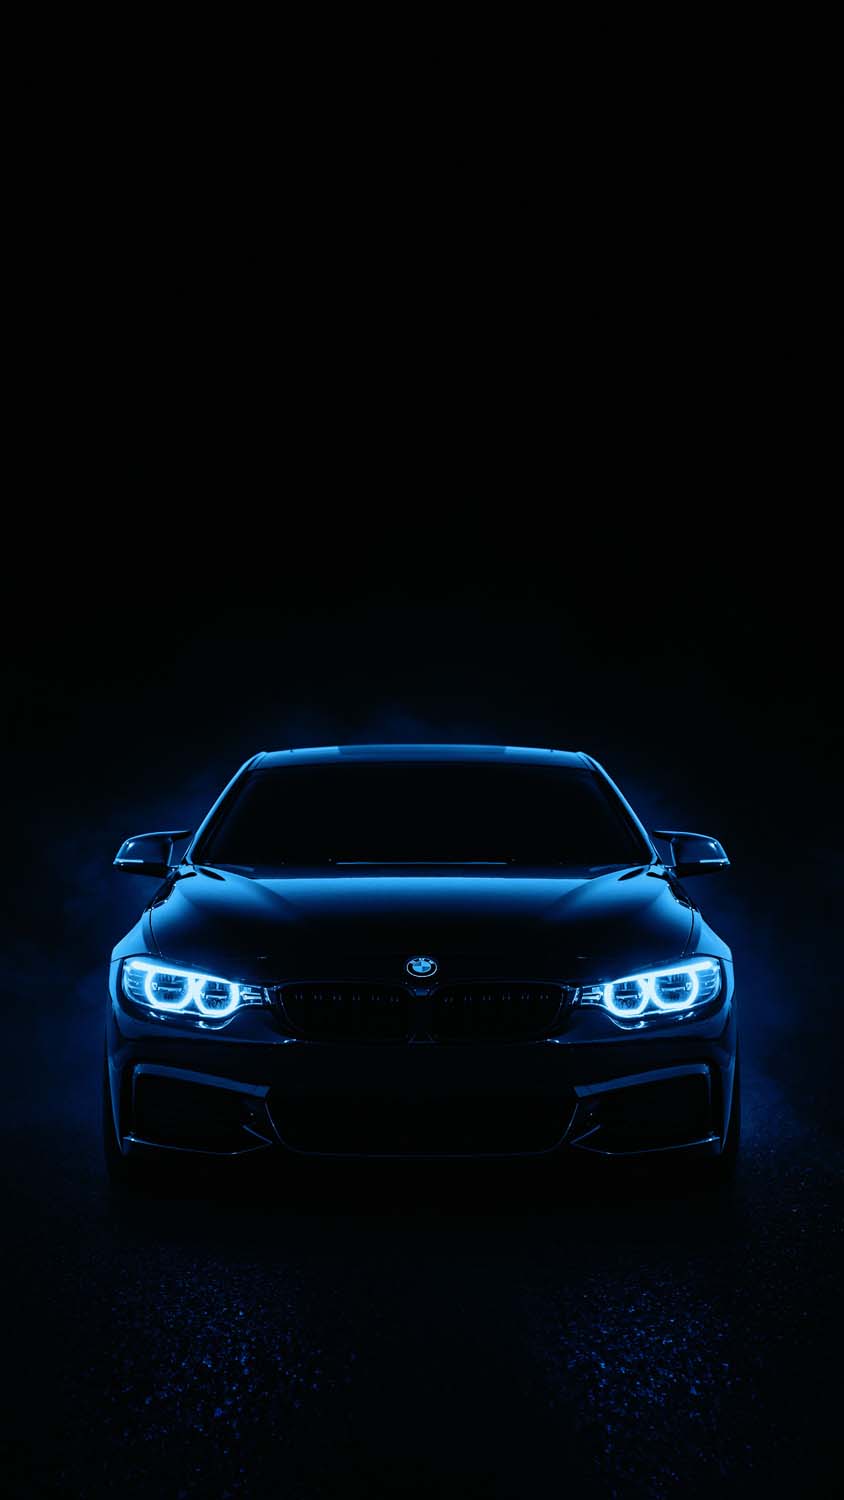 BMW Car Glow iPhone Wallpaper HD